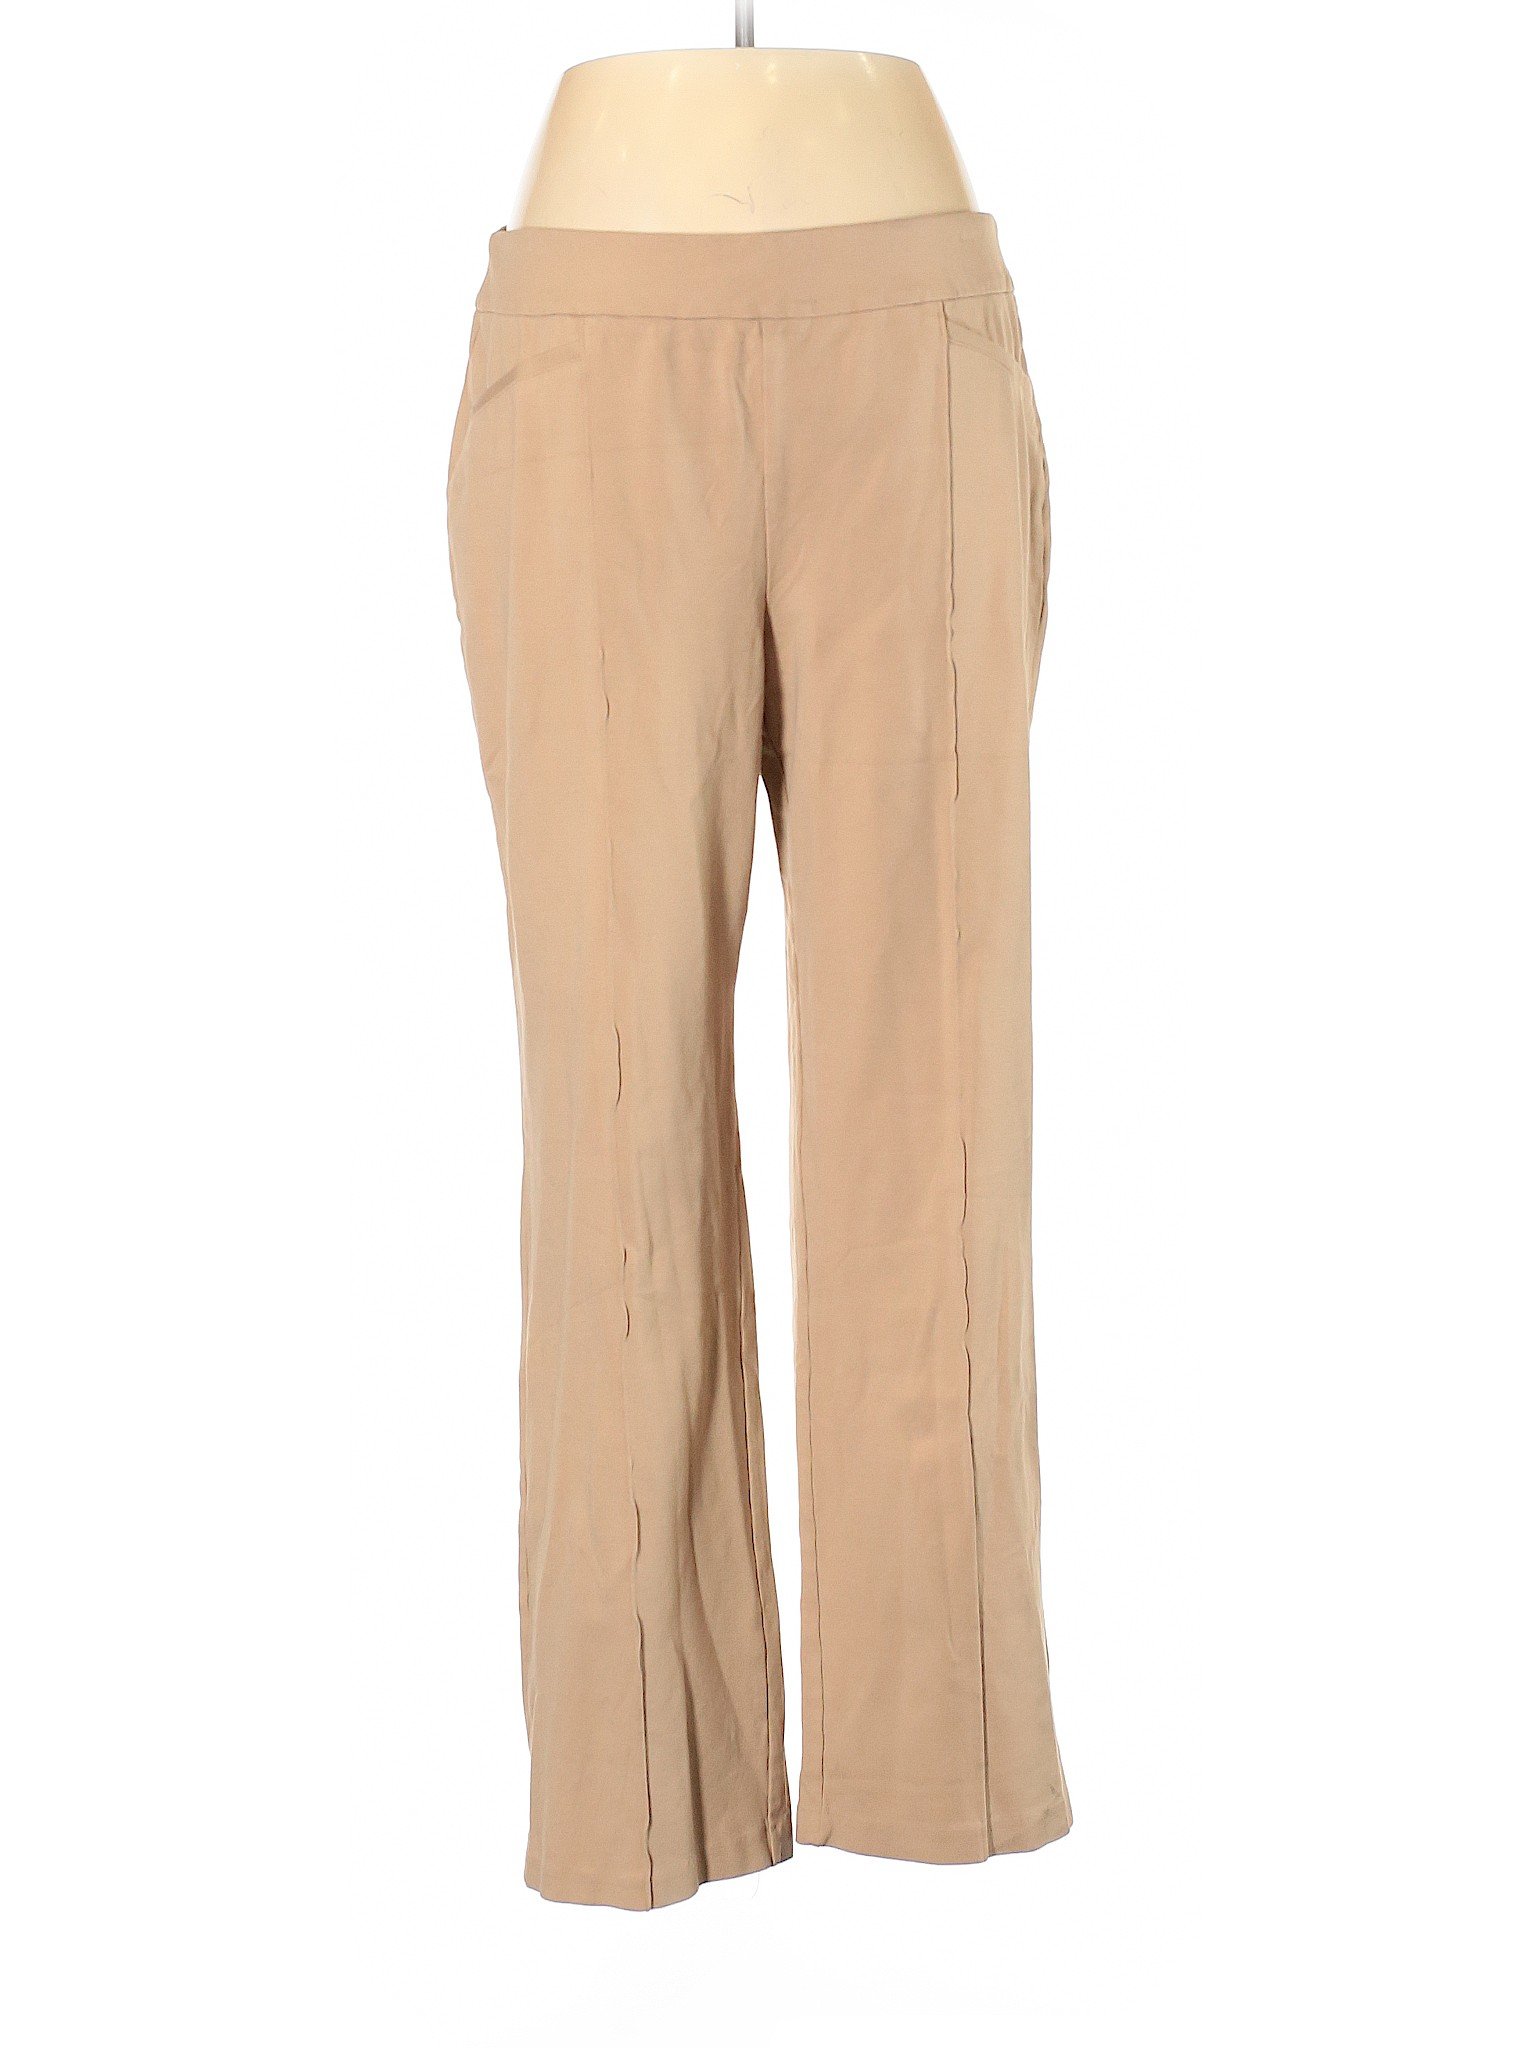 Cato Women Brown Casual Pants L | eBay